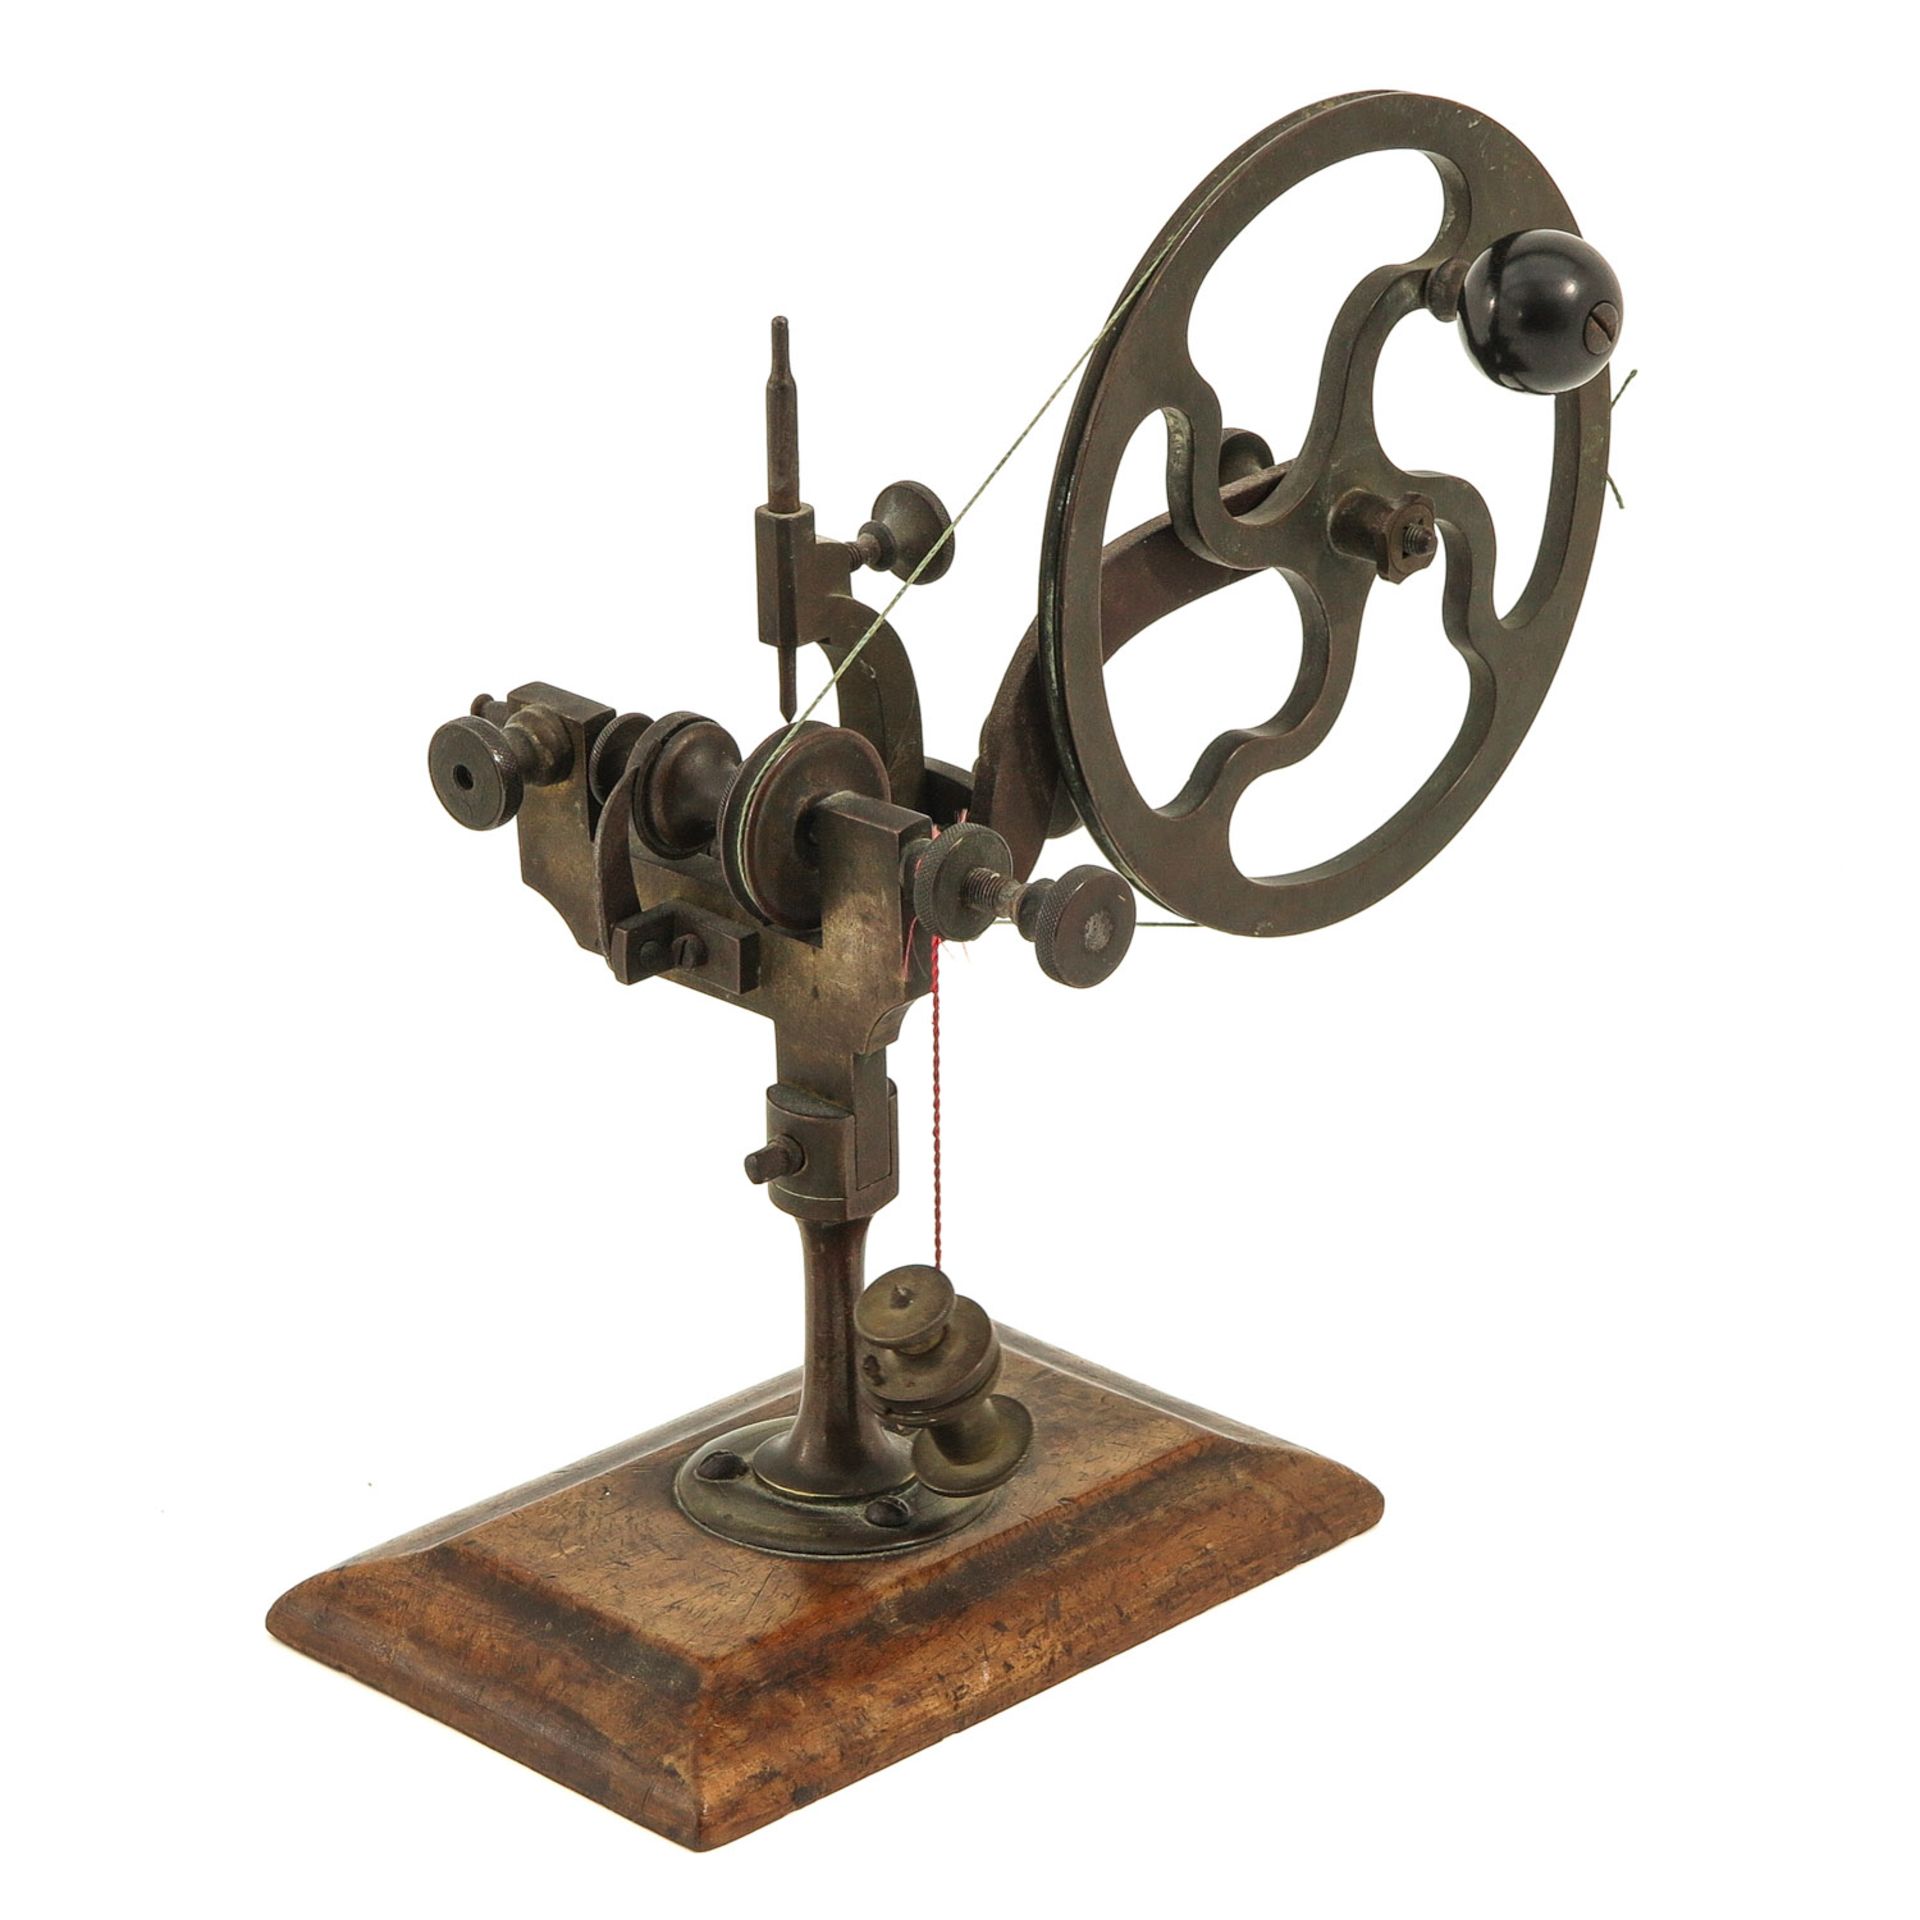 A Watch Makers Machine or Arrondissement Machine